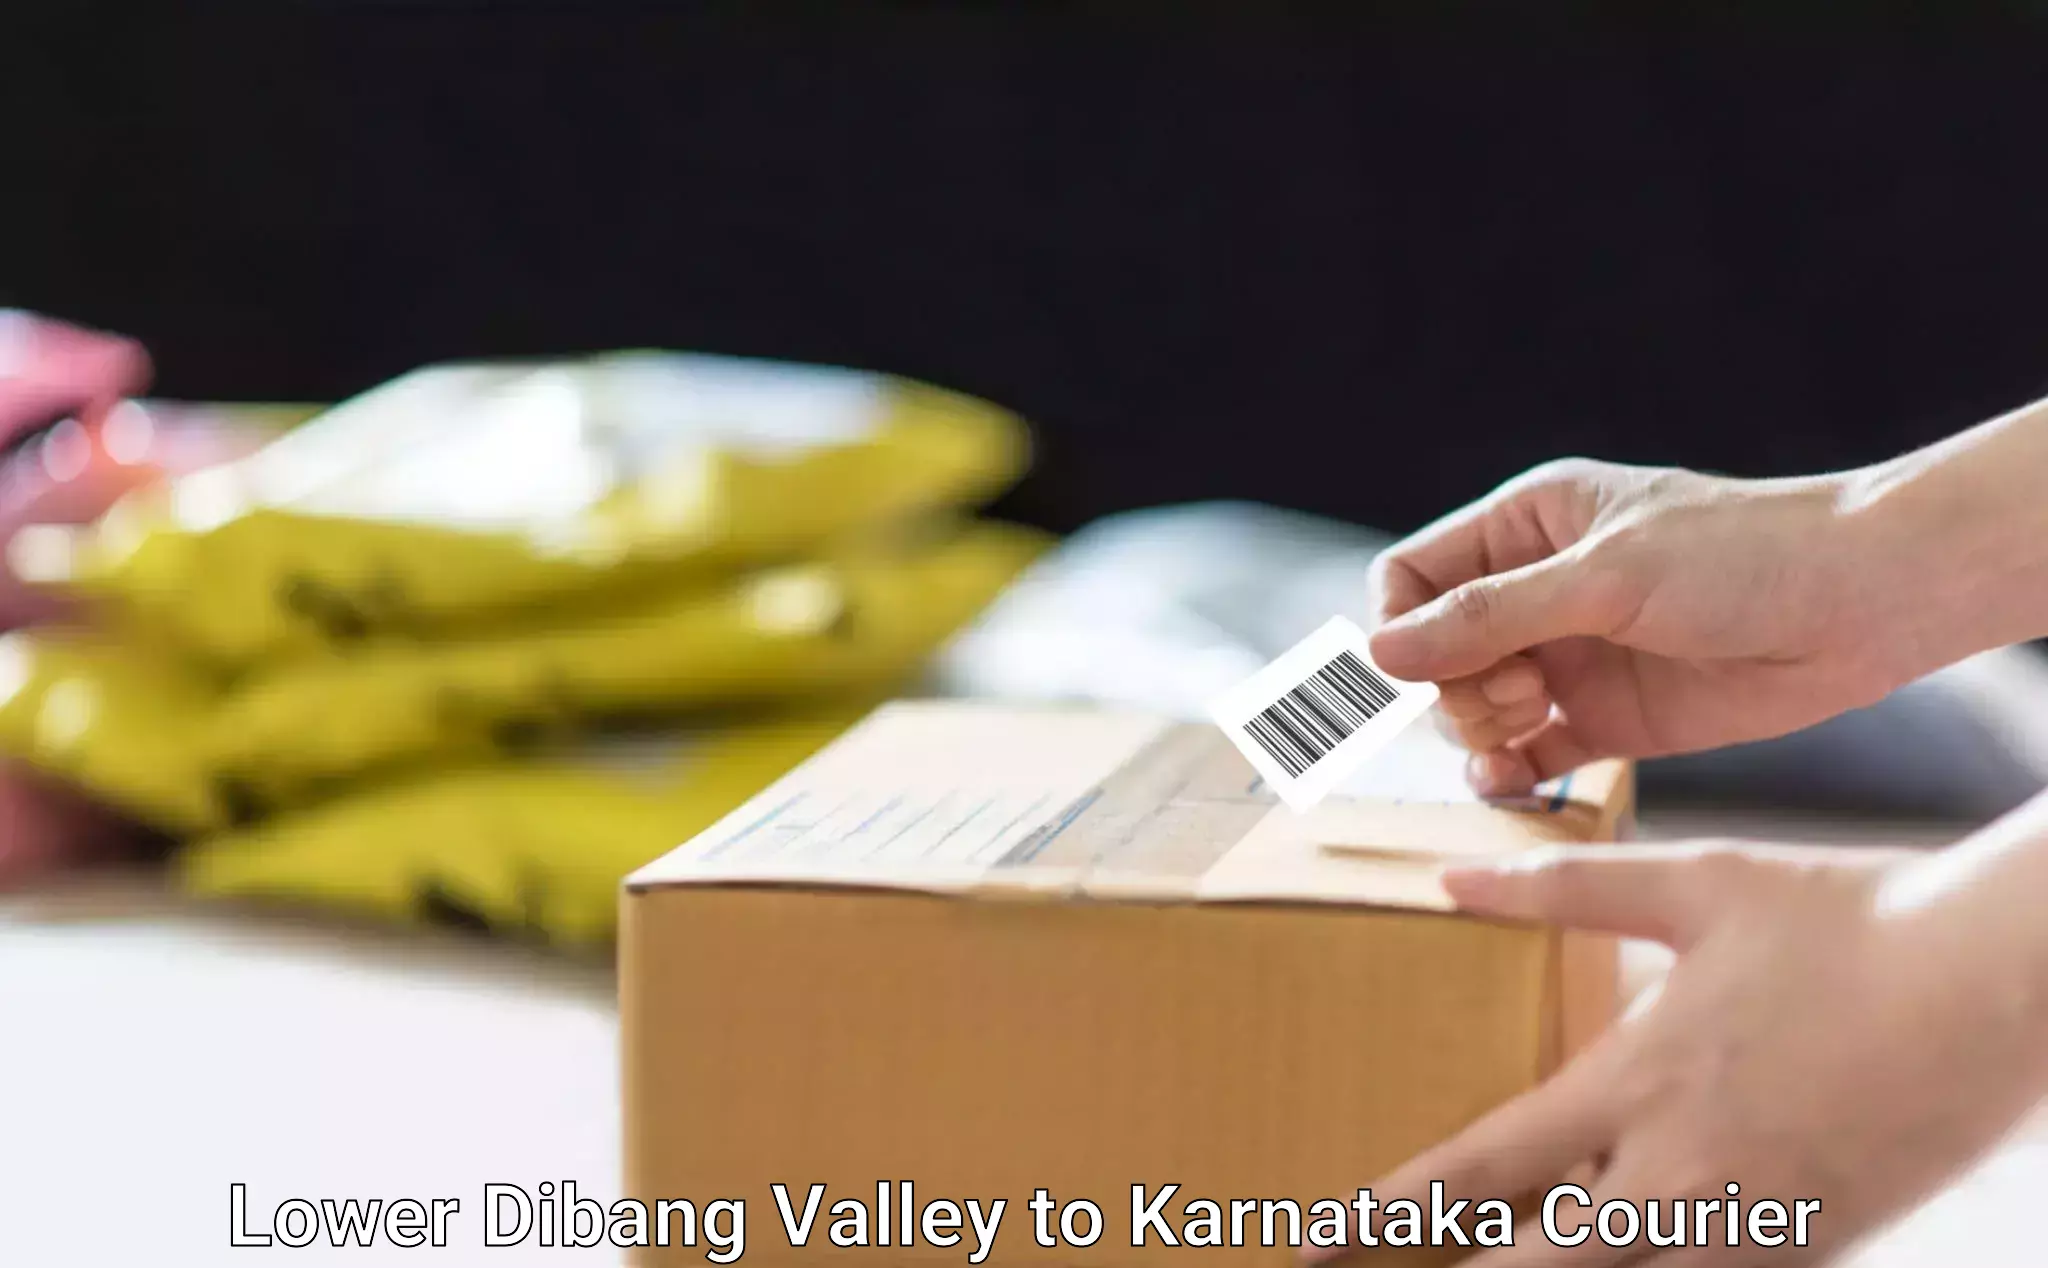 User-friendly courier app Lower Dibang Valley to Karnataka